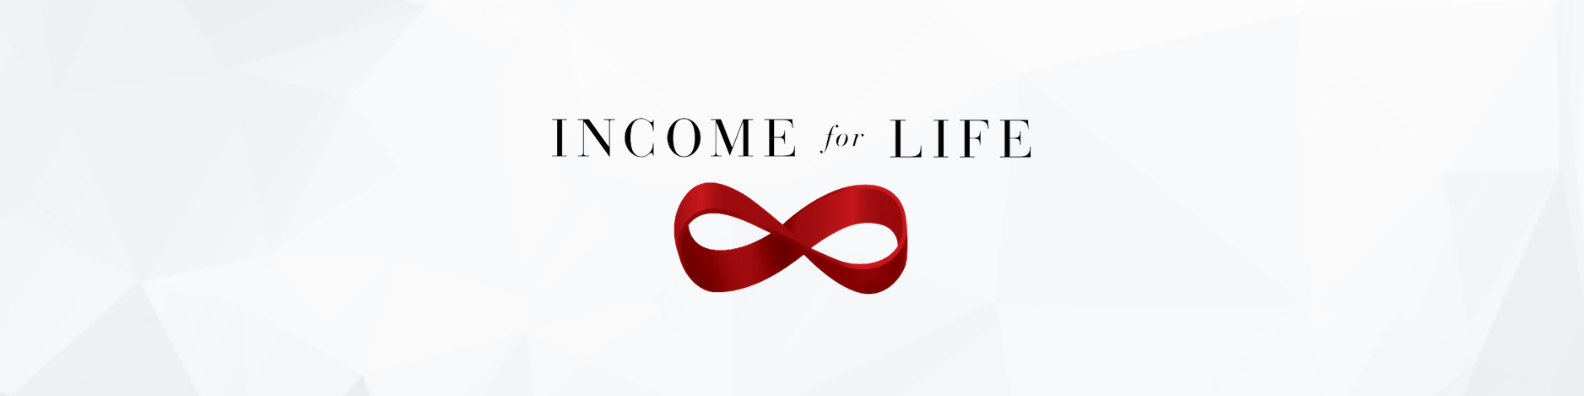 Income For Life logo